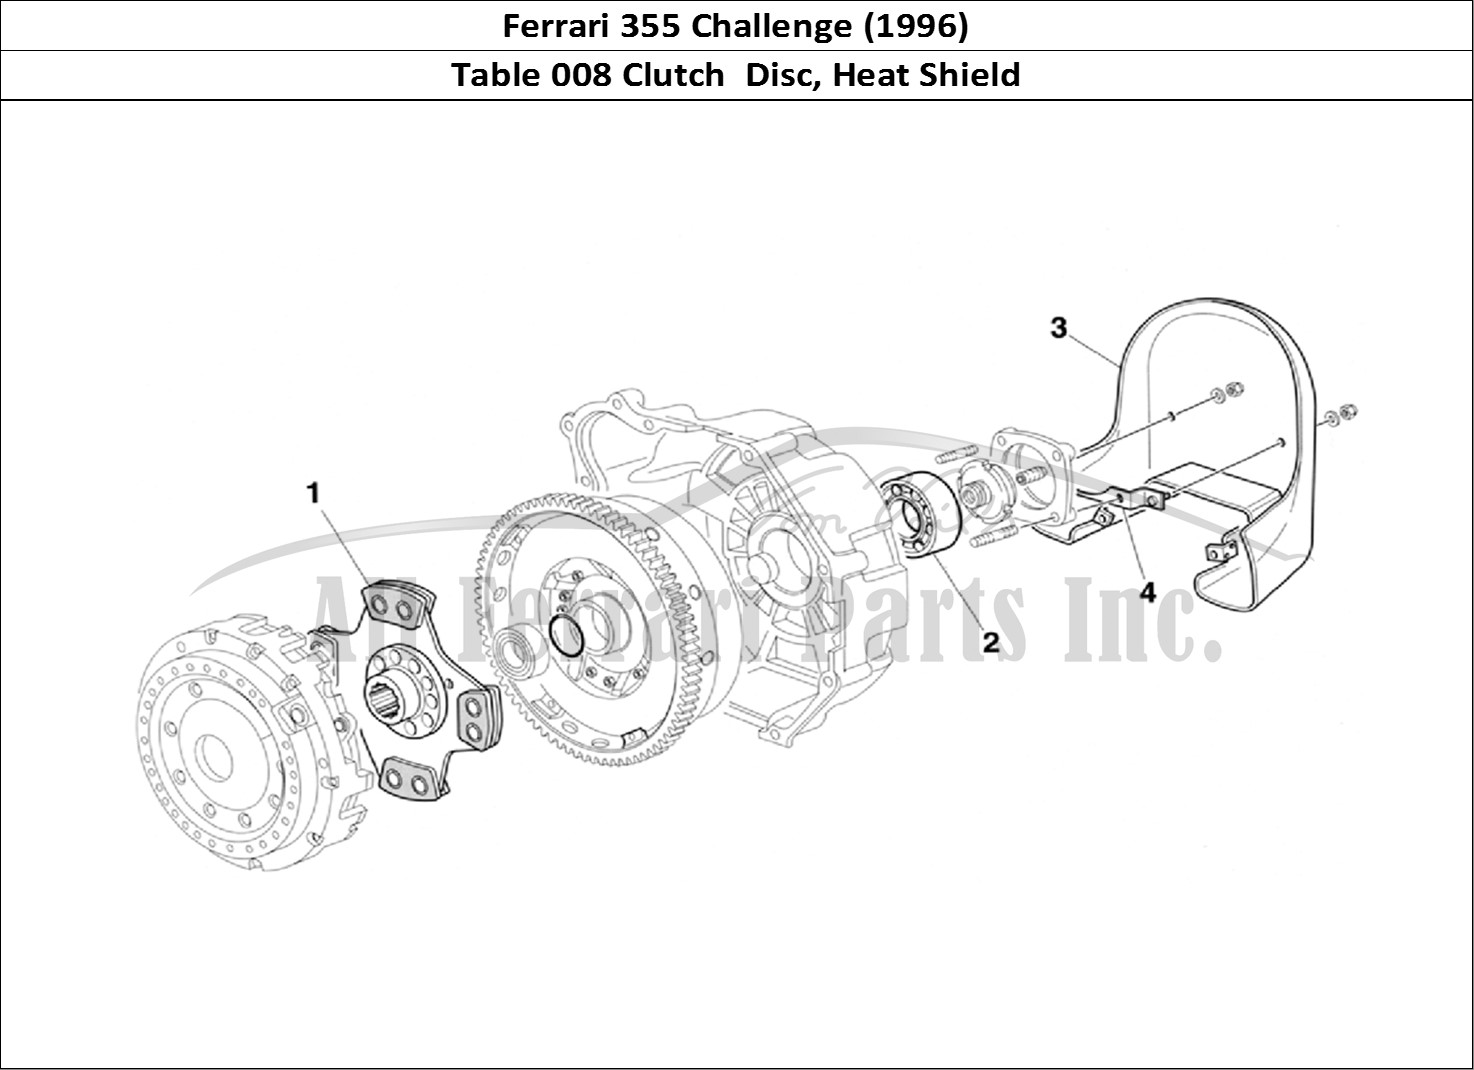 Ferrari Parts Ferrari 355 Challenge (1996) Page 008 Clutch Disc - Heat Shield